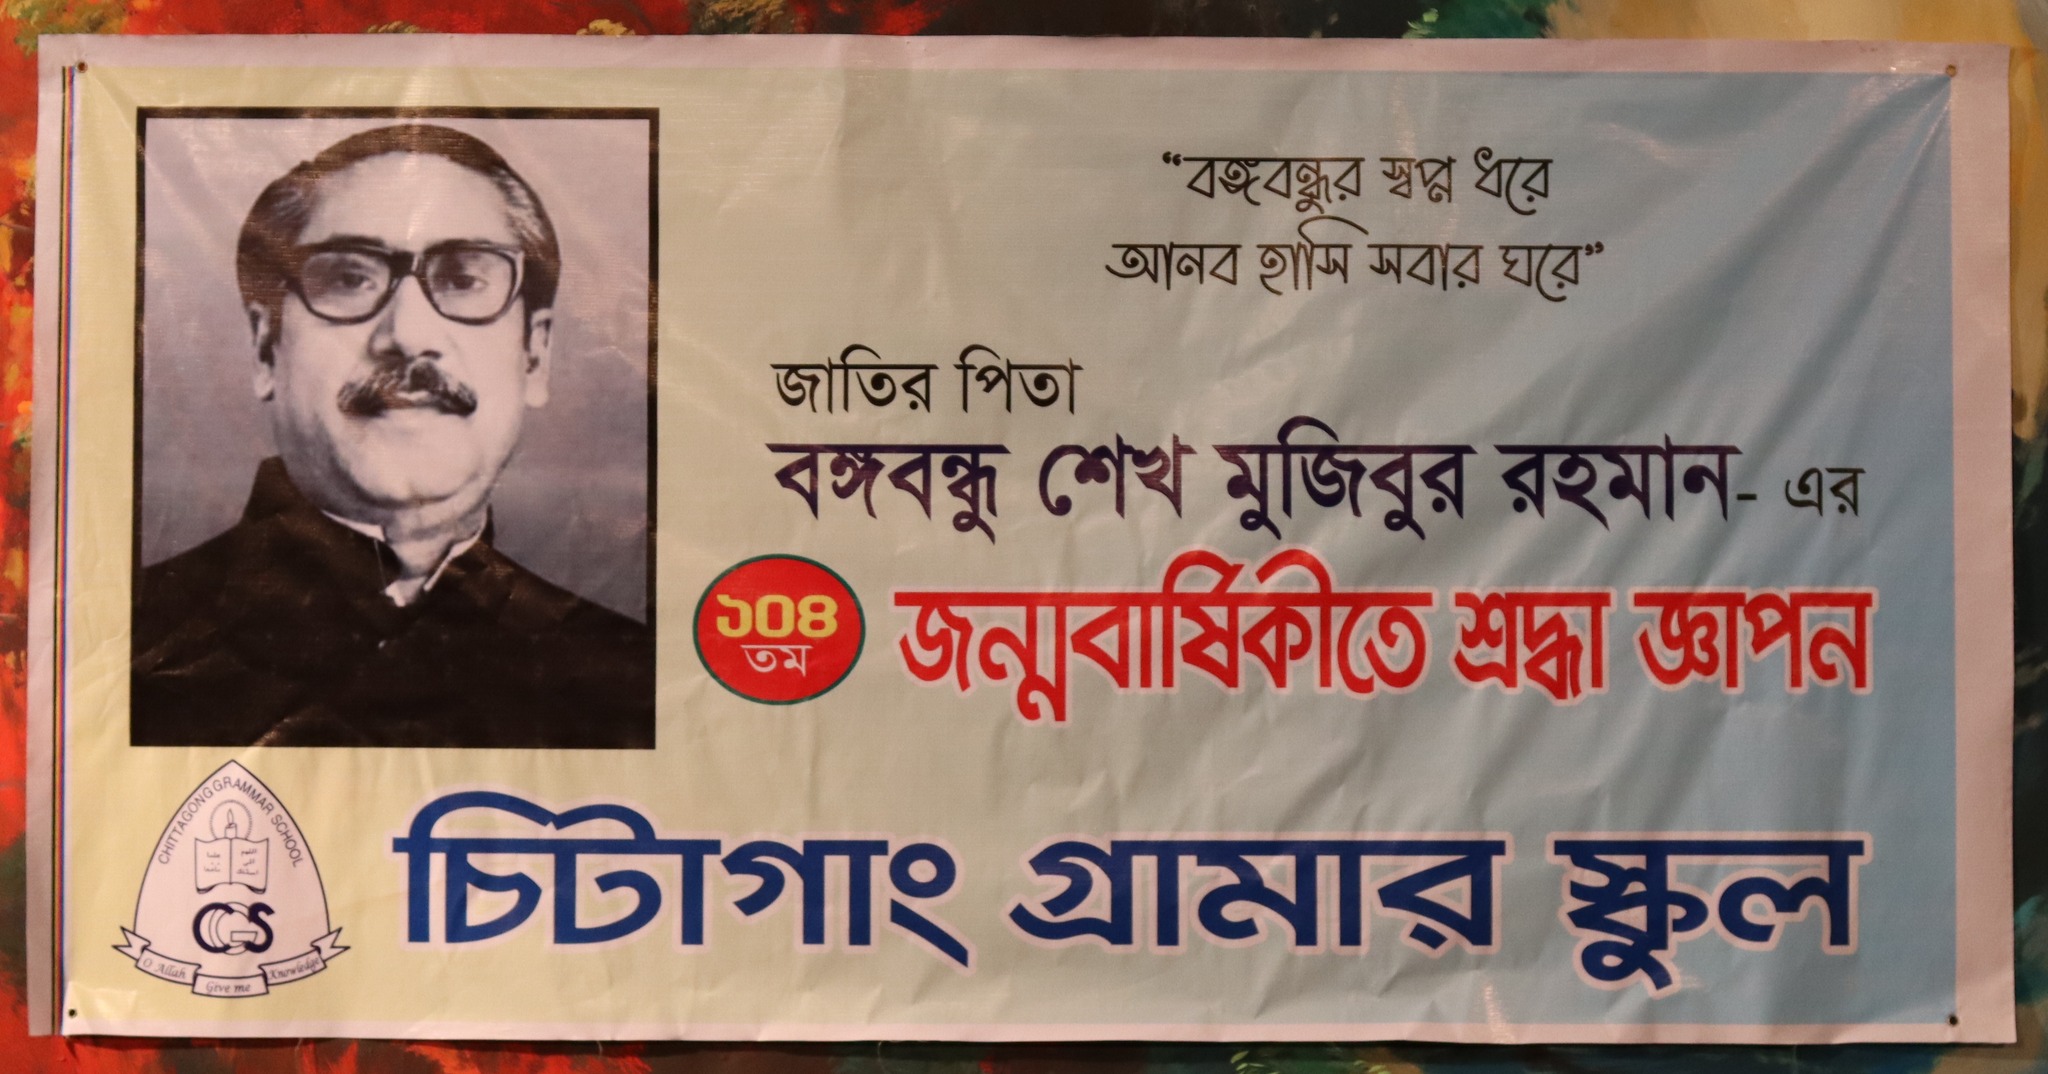 Birthday celebration of Bangabandhu Sheikh Mujibur Rahman